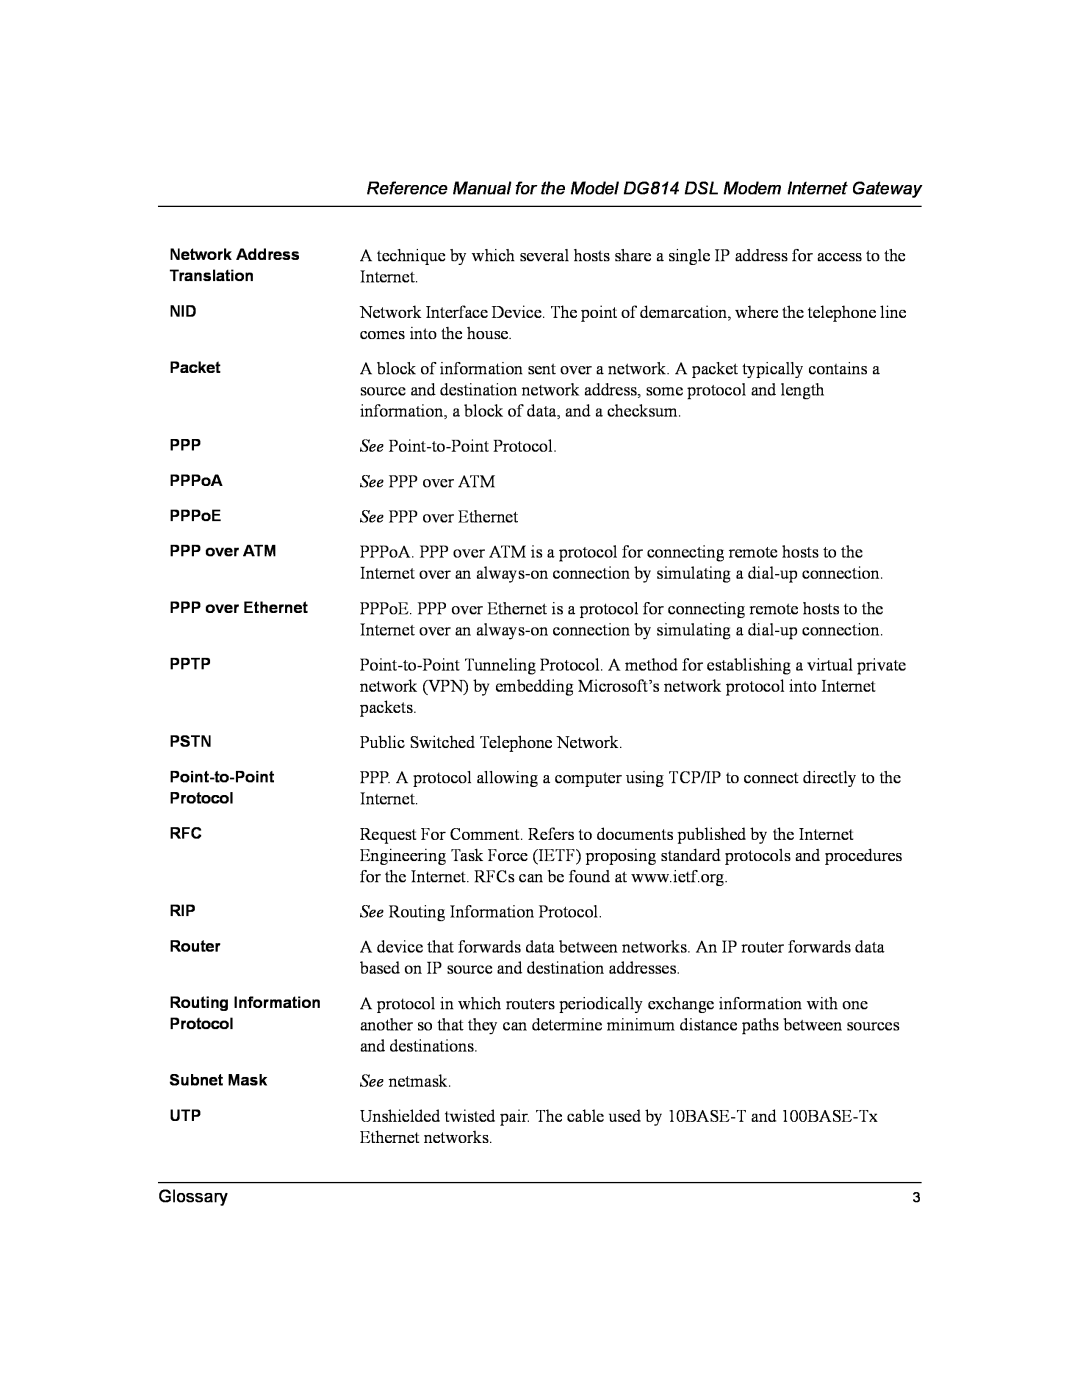 NETGEAR manual Reference Manual for the Model DG814 DSL Modem Internet Gateway, Glossary 